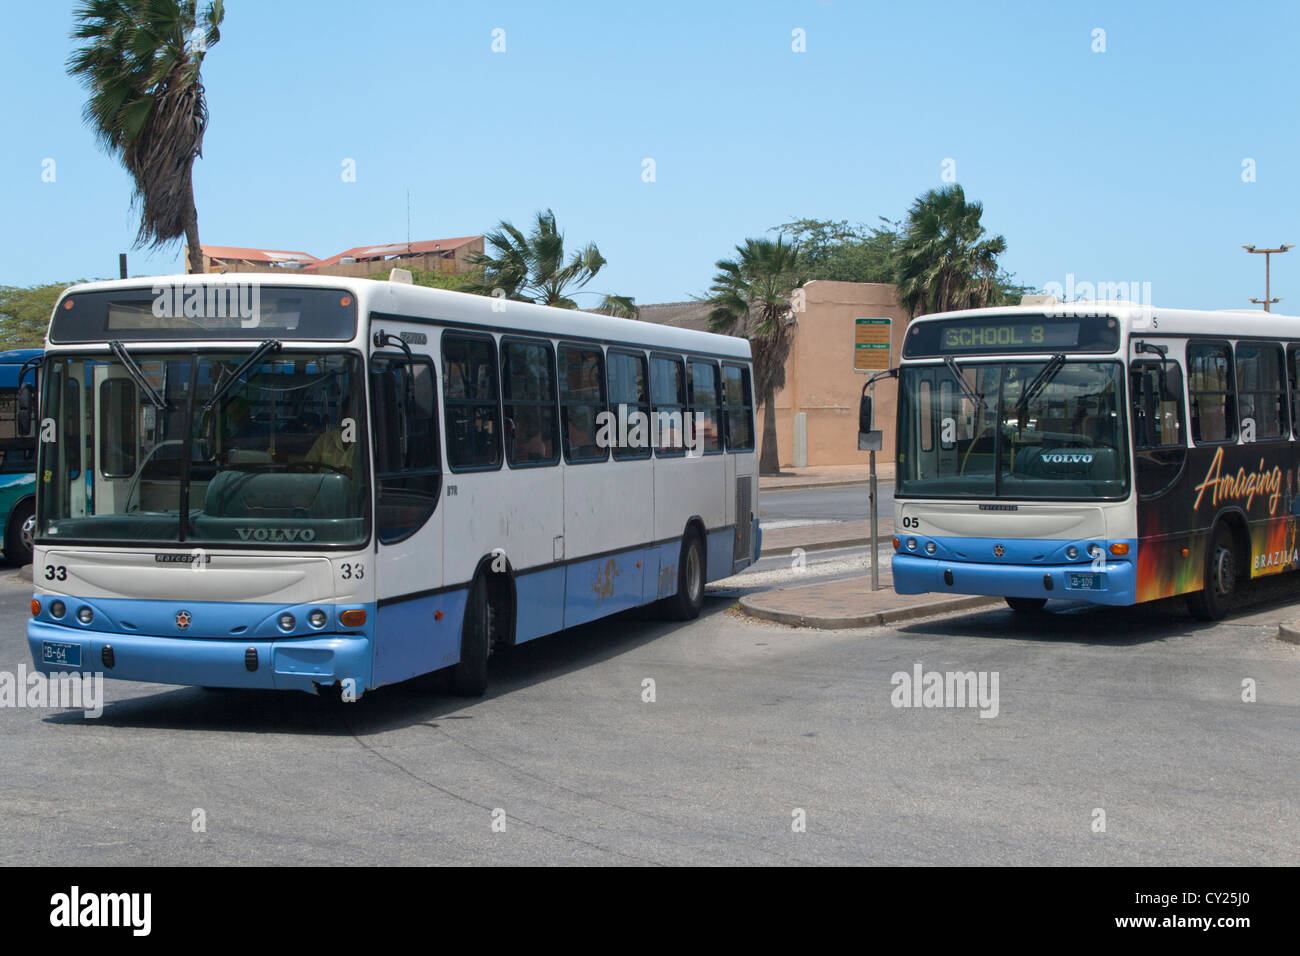 The main bus station in downtown Oranjestad on the Caribbean island of Aruba Stock Photo